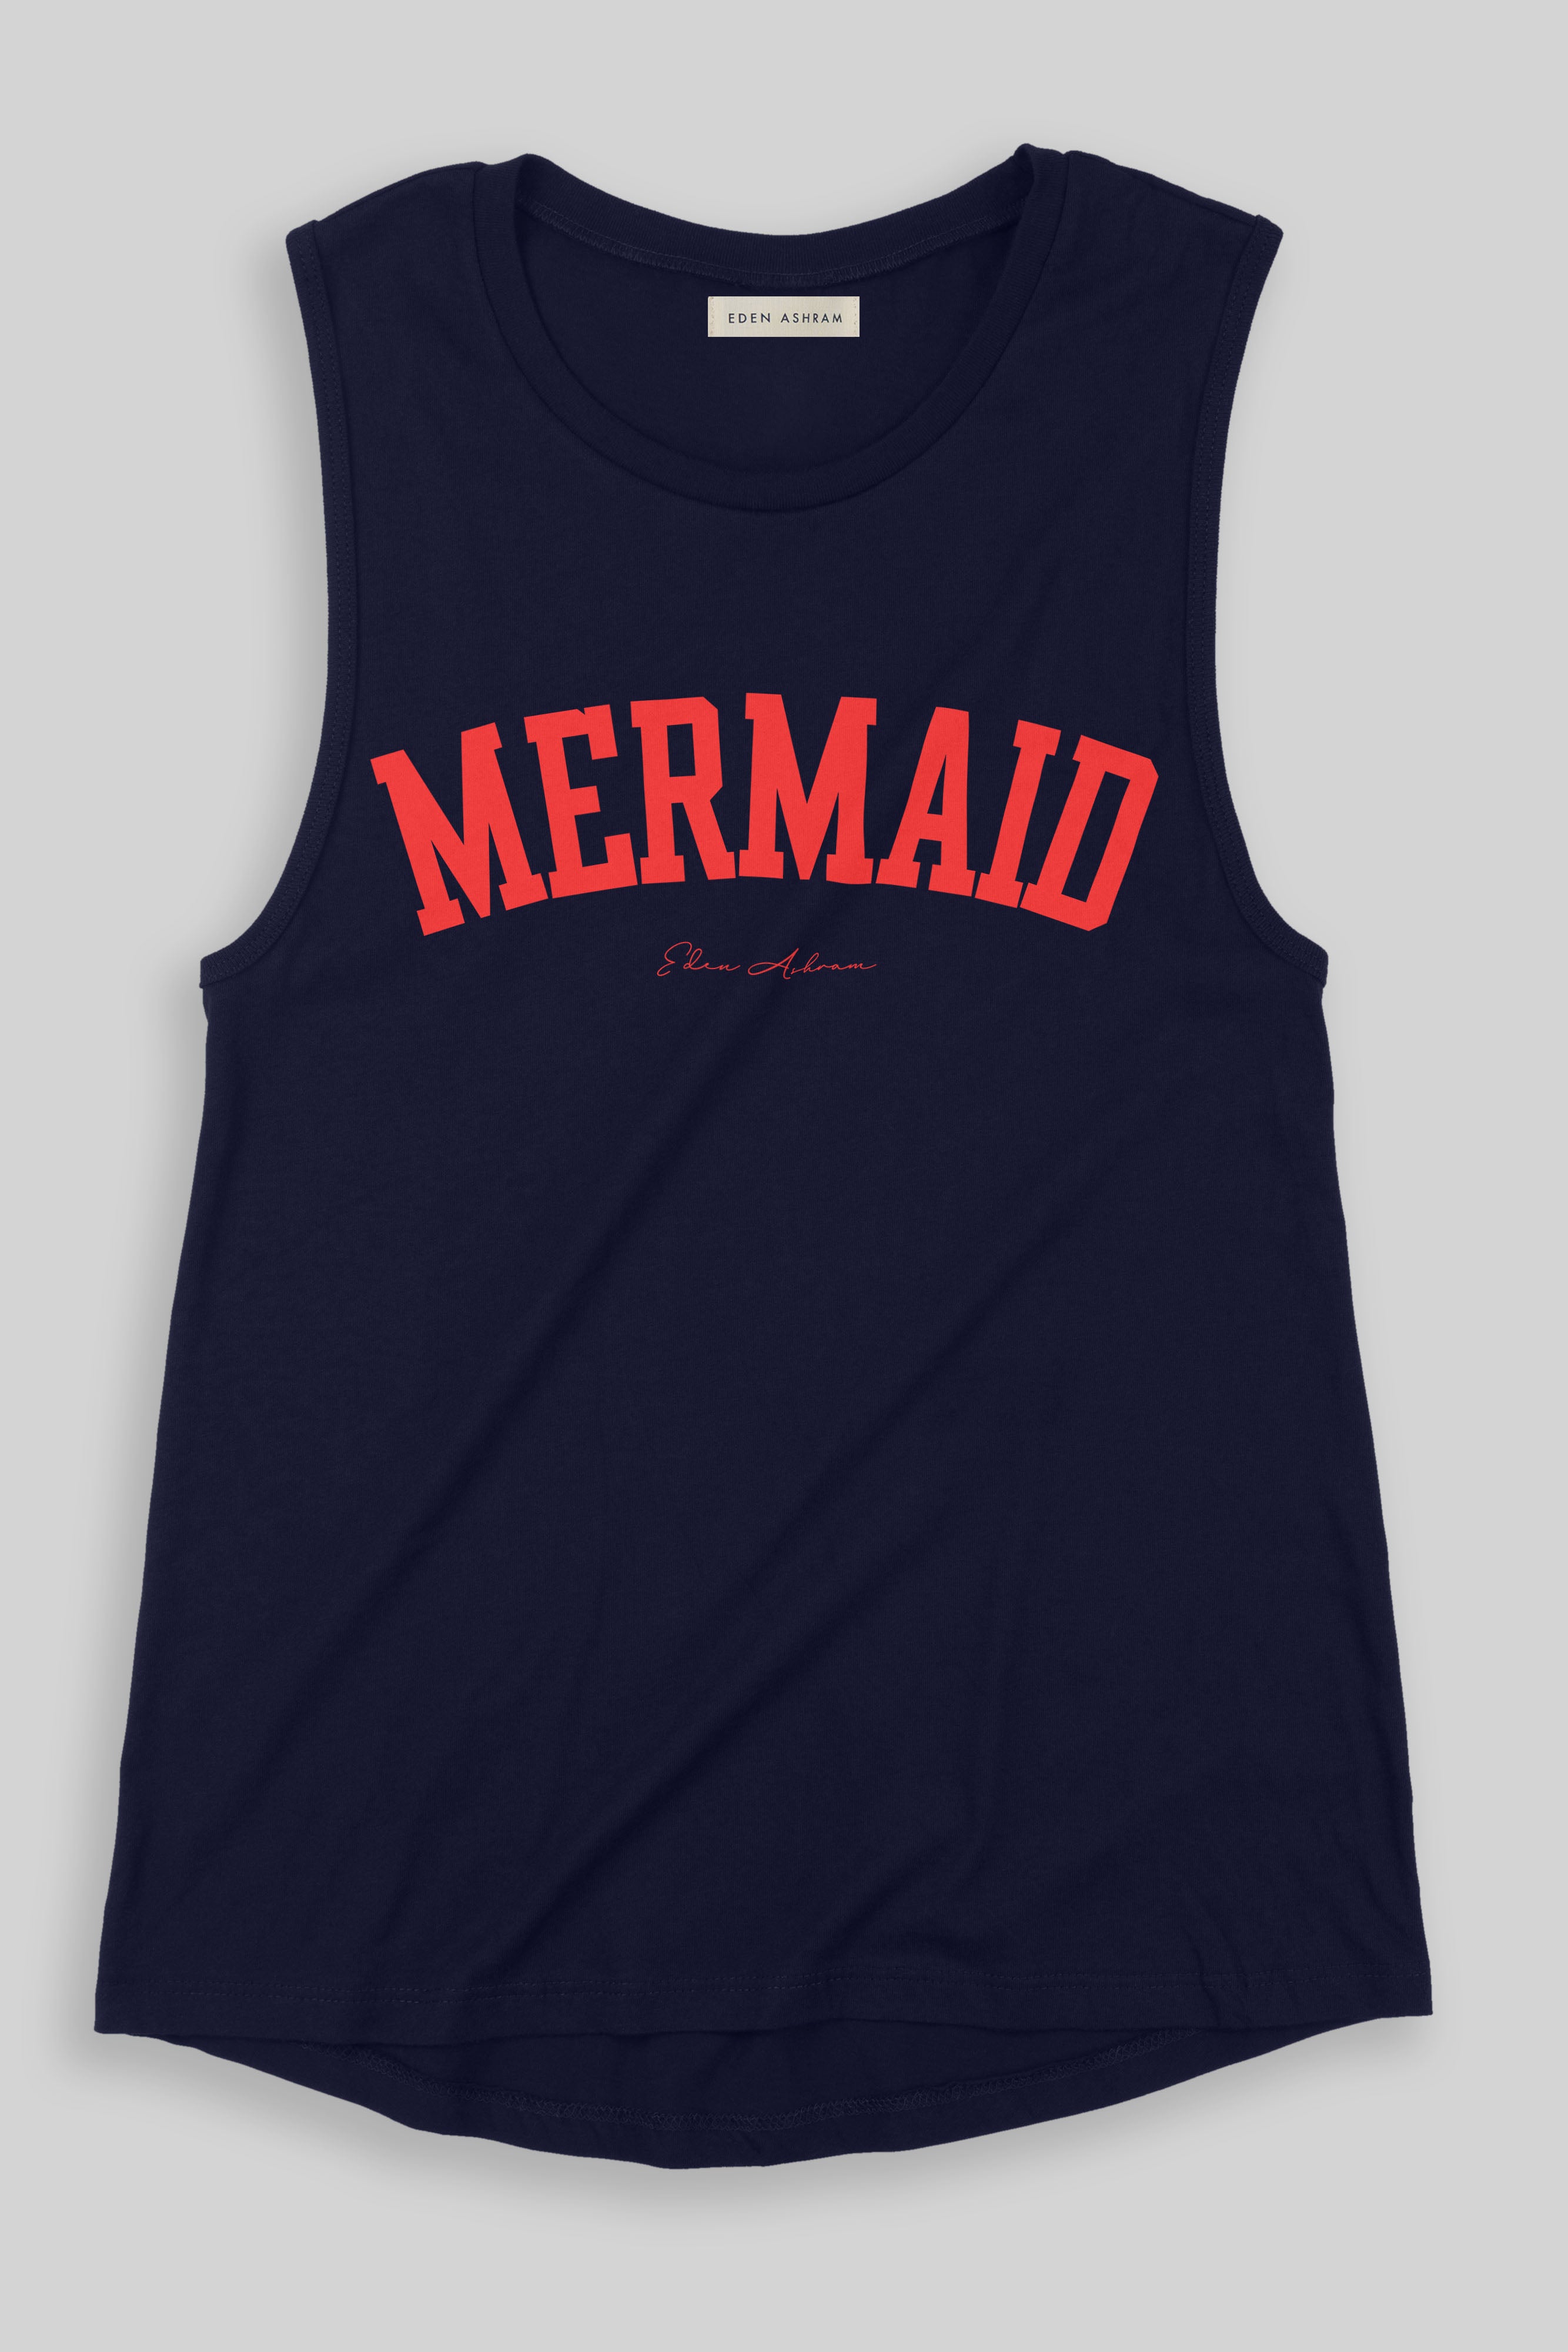 EDEN ASHRAM Mermaid Premium Jersey Muscle Tank Navy